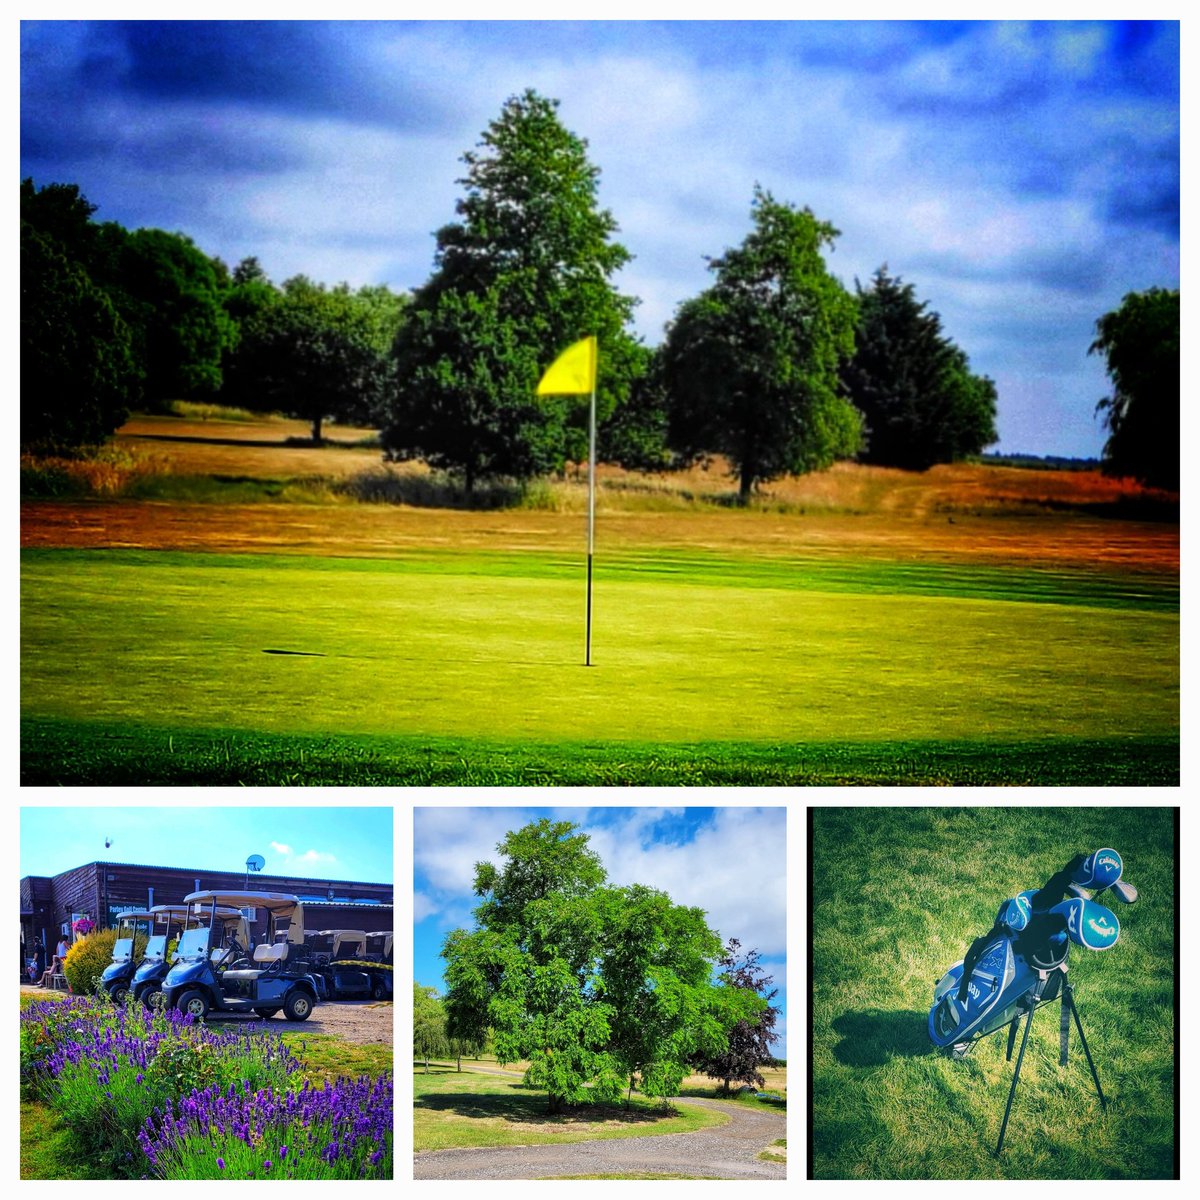 Golf life @parleygolf bournemouth 
#Golf #golfing #GolfLife #golfer #golfcourse #photography #photographer #PHOTOS